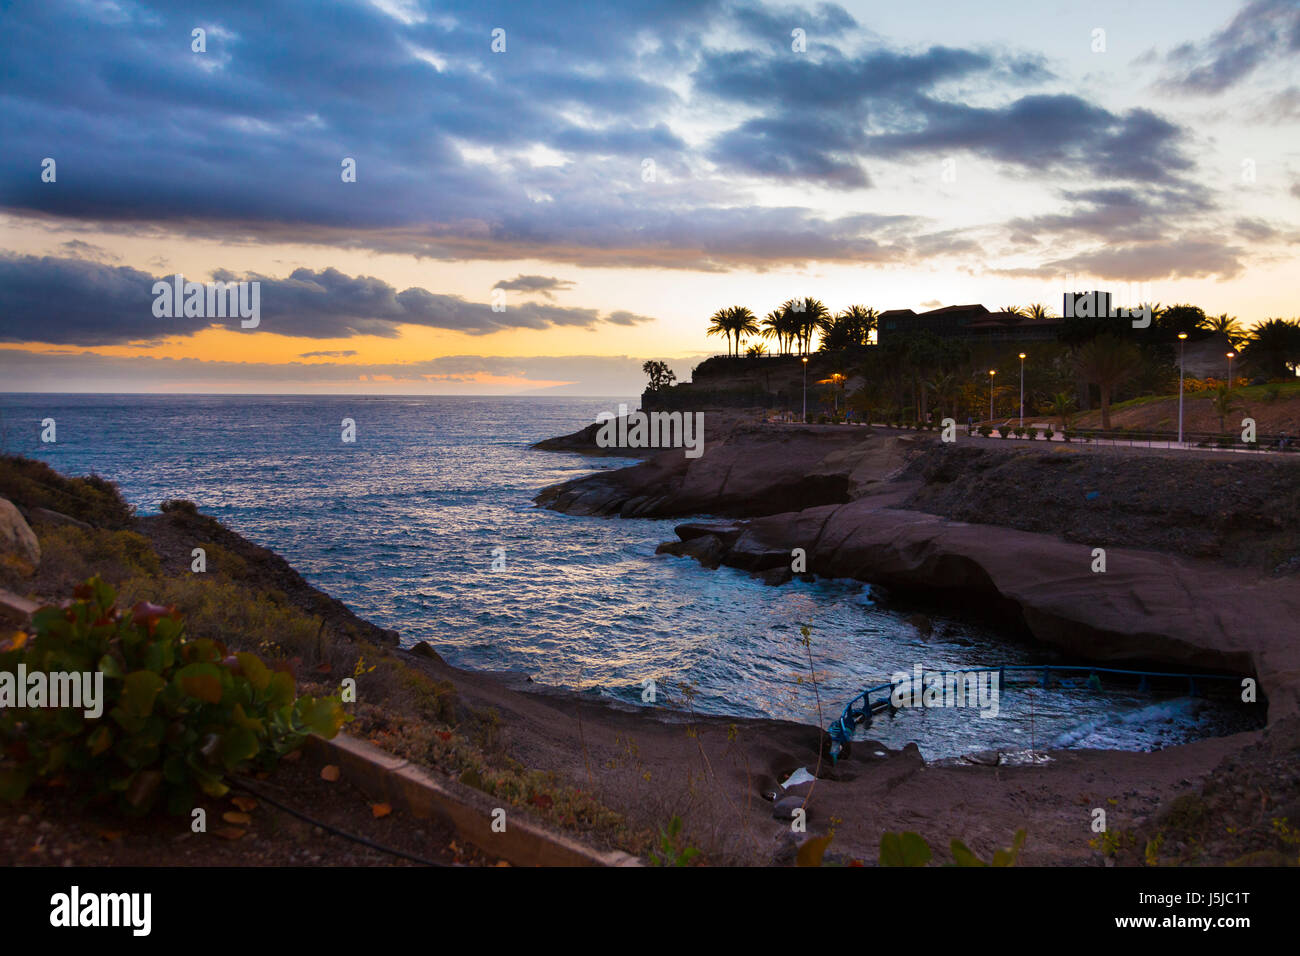 View of the Atlantic Ocean and the rocky coast of Costa Adeje, Tenerife, Spain Stock Photo